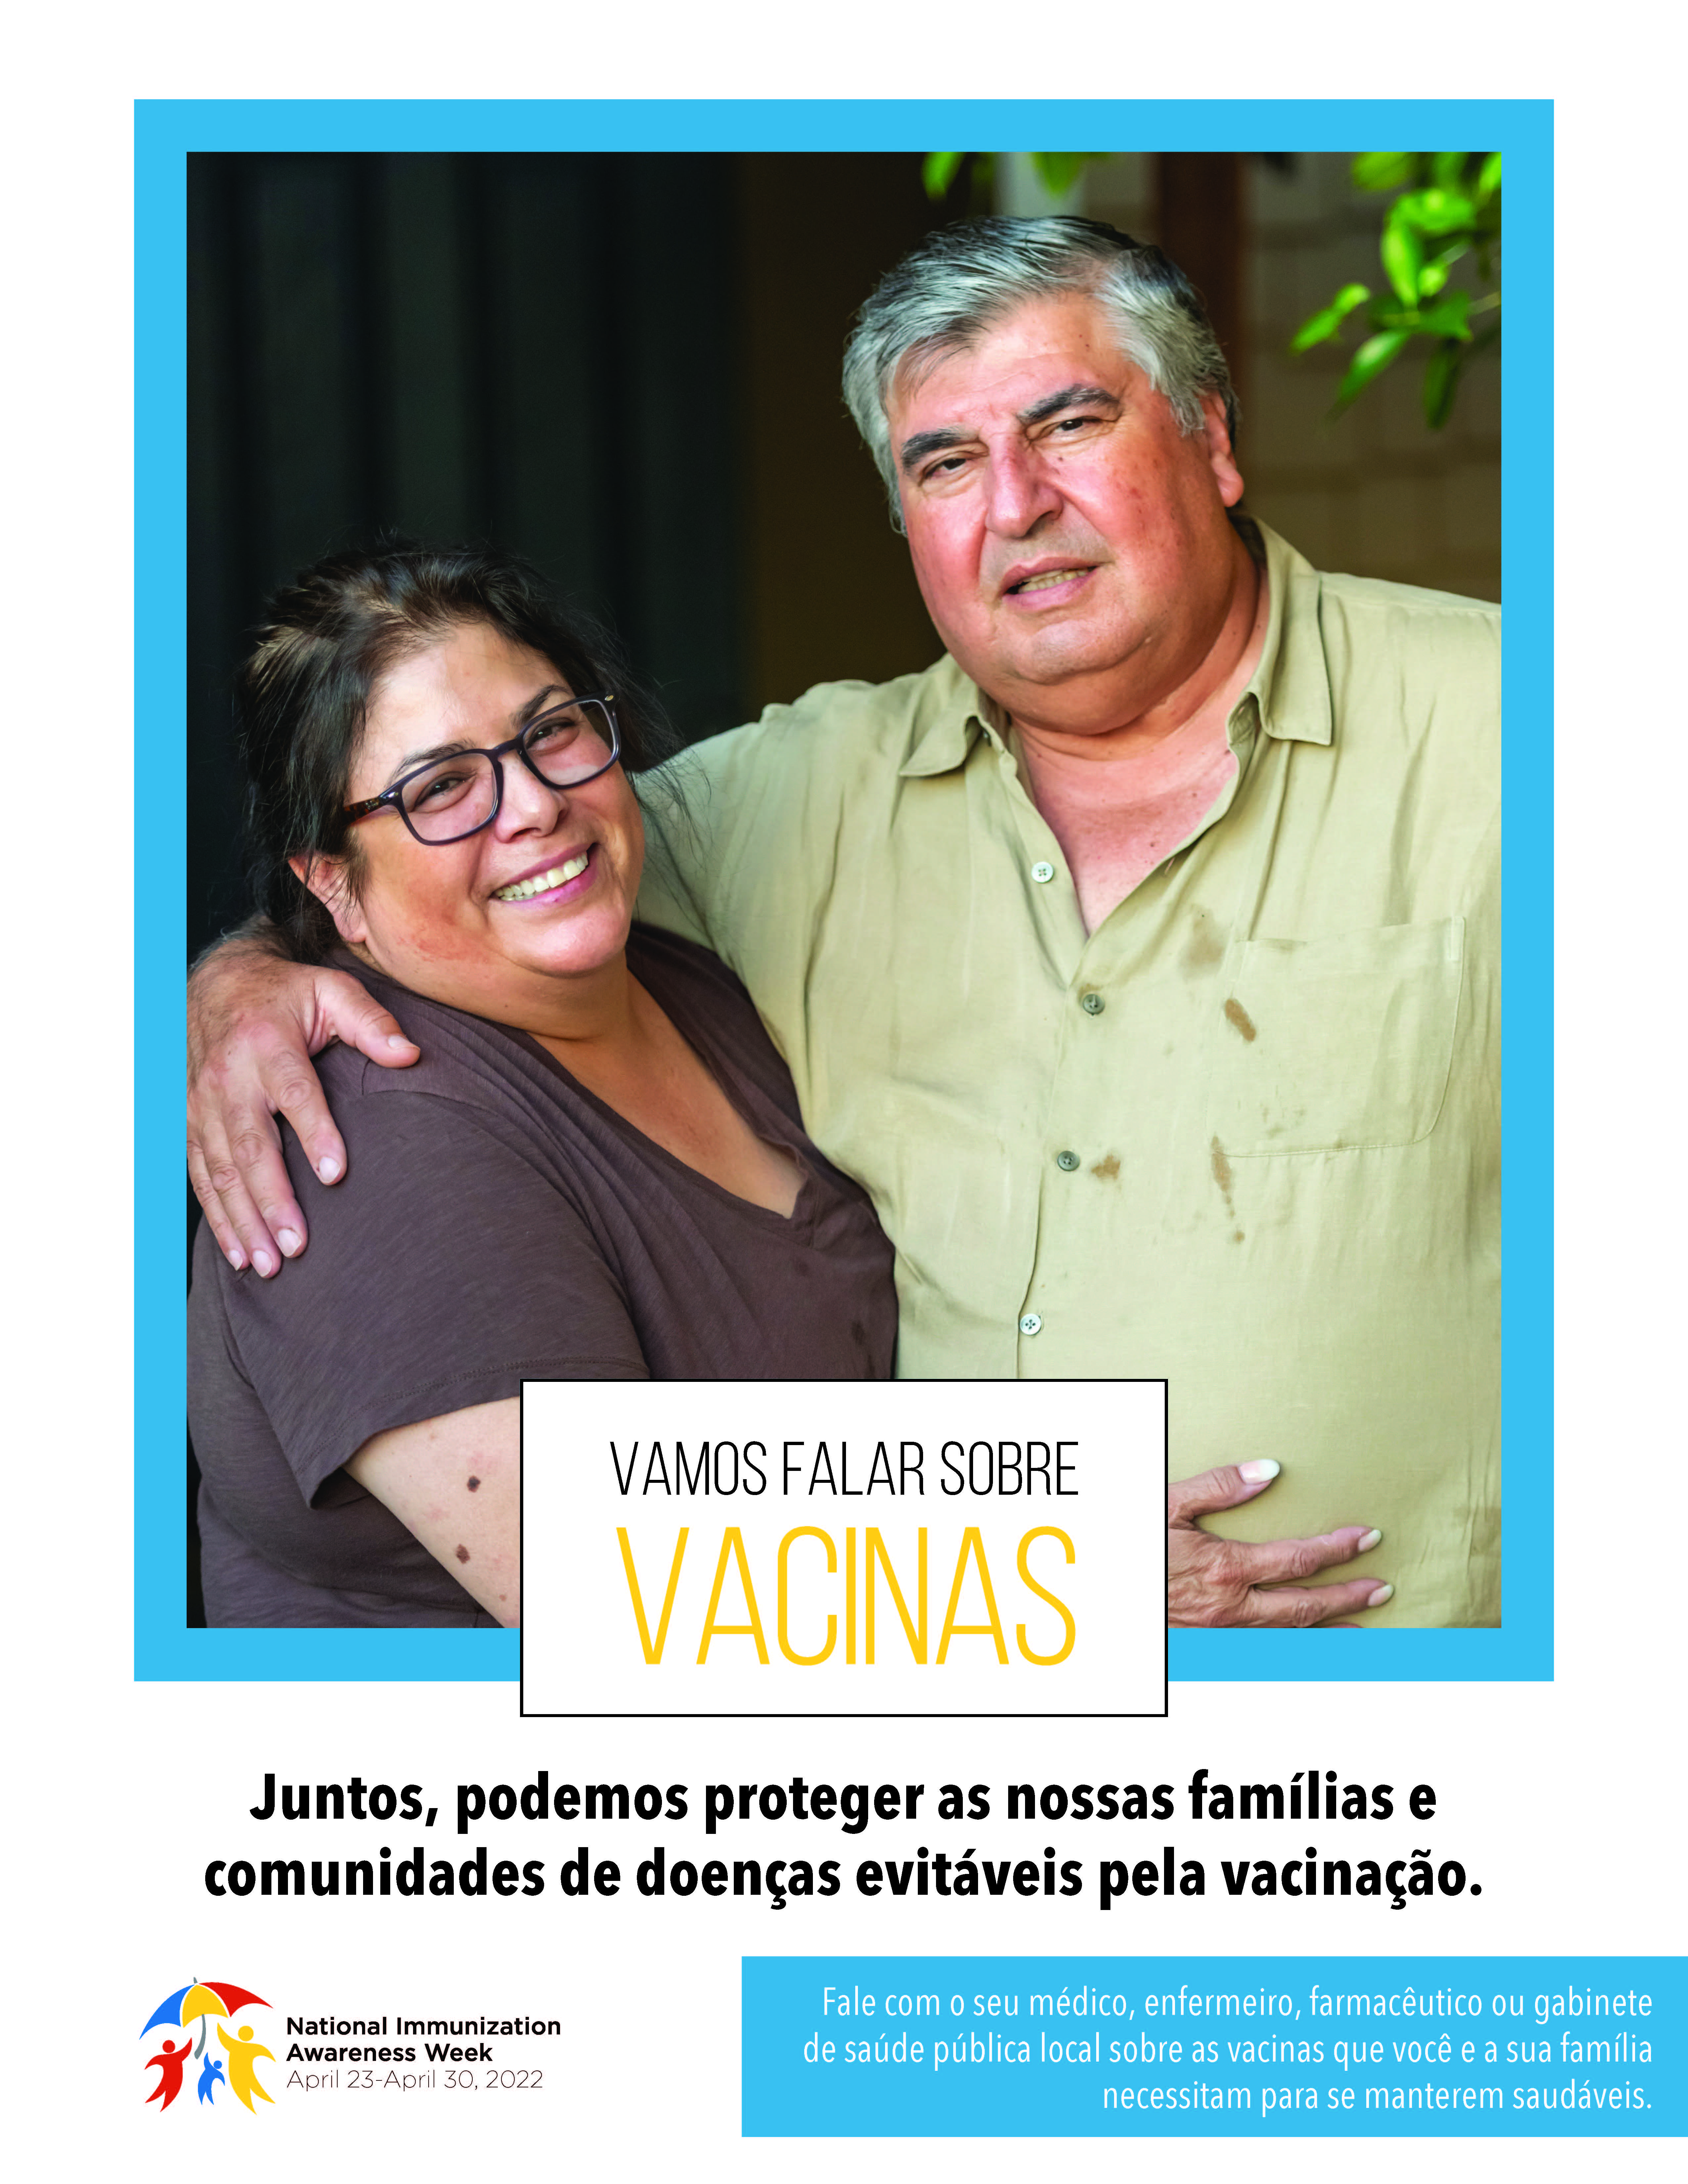 Let's talk about vaccines (Portuguese)